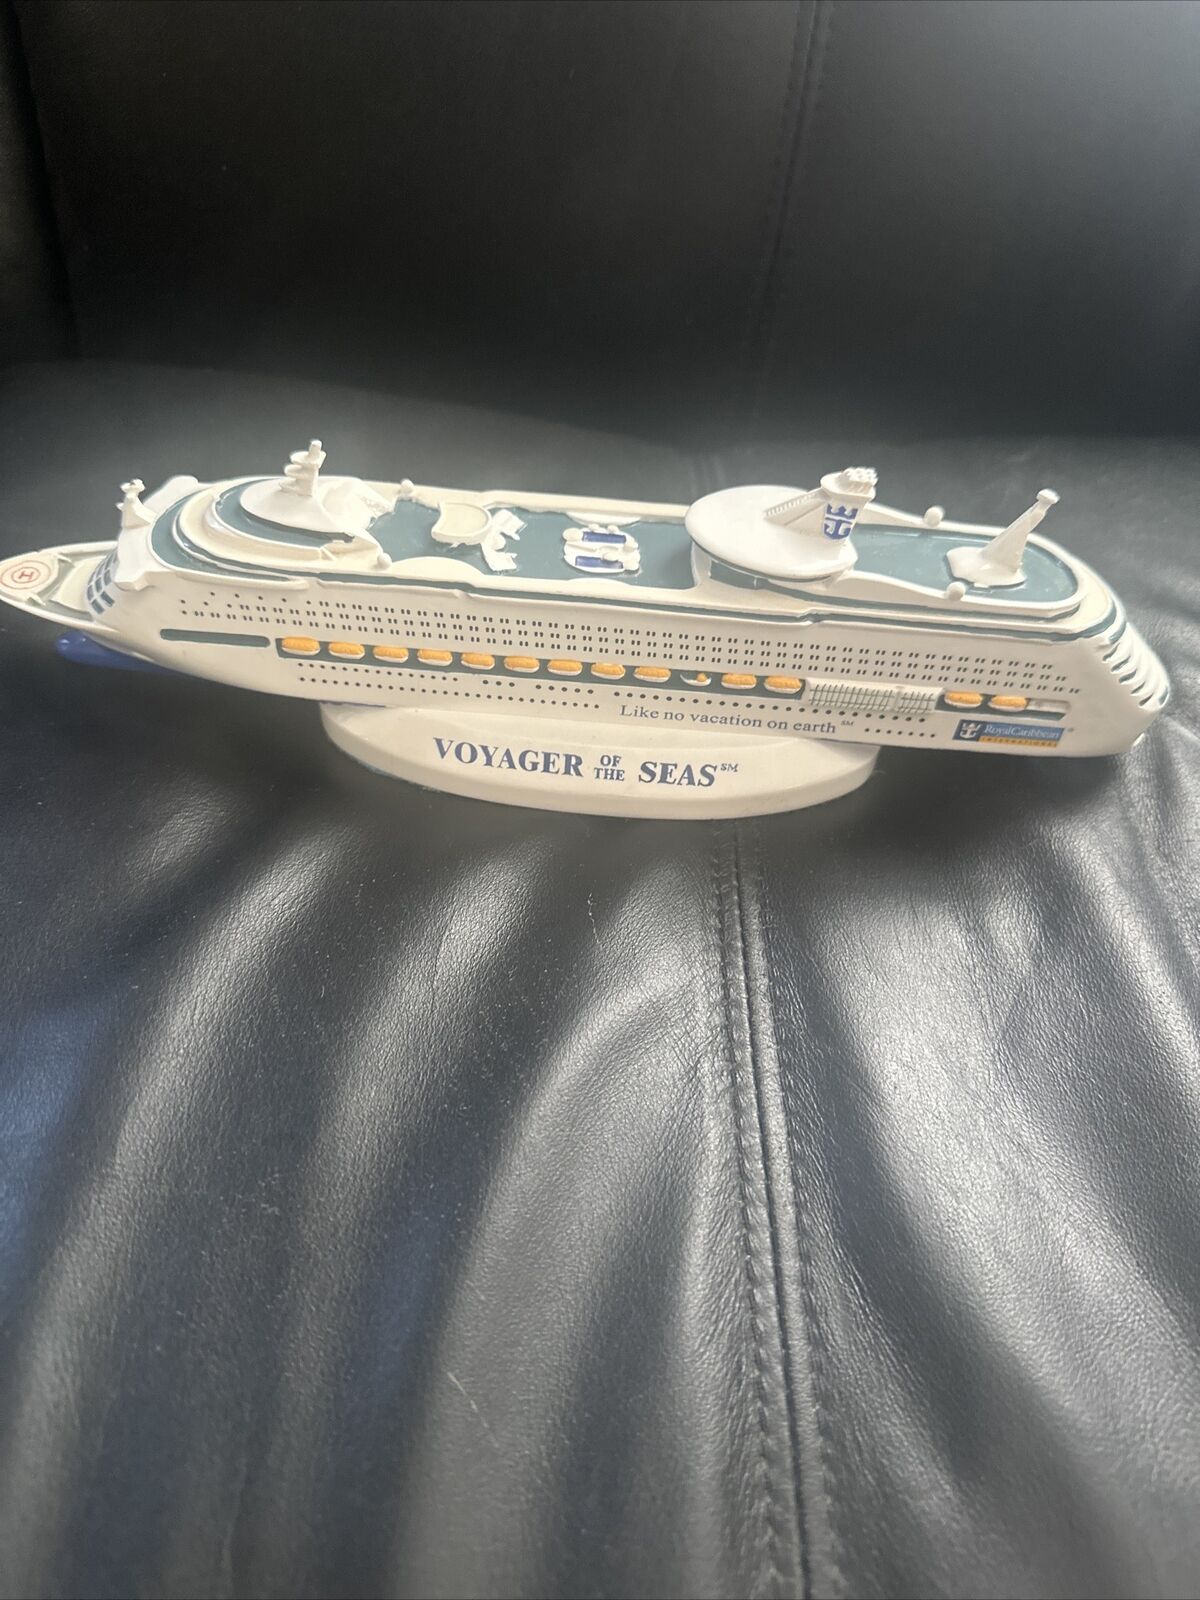 Royal Caribbean Voyager of the Seas cruise SHIP MODEL Orland Bahama RCL Souvenir